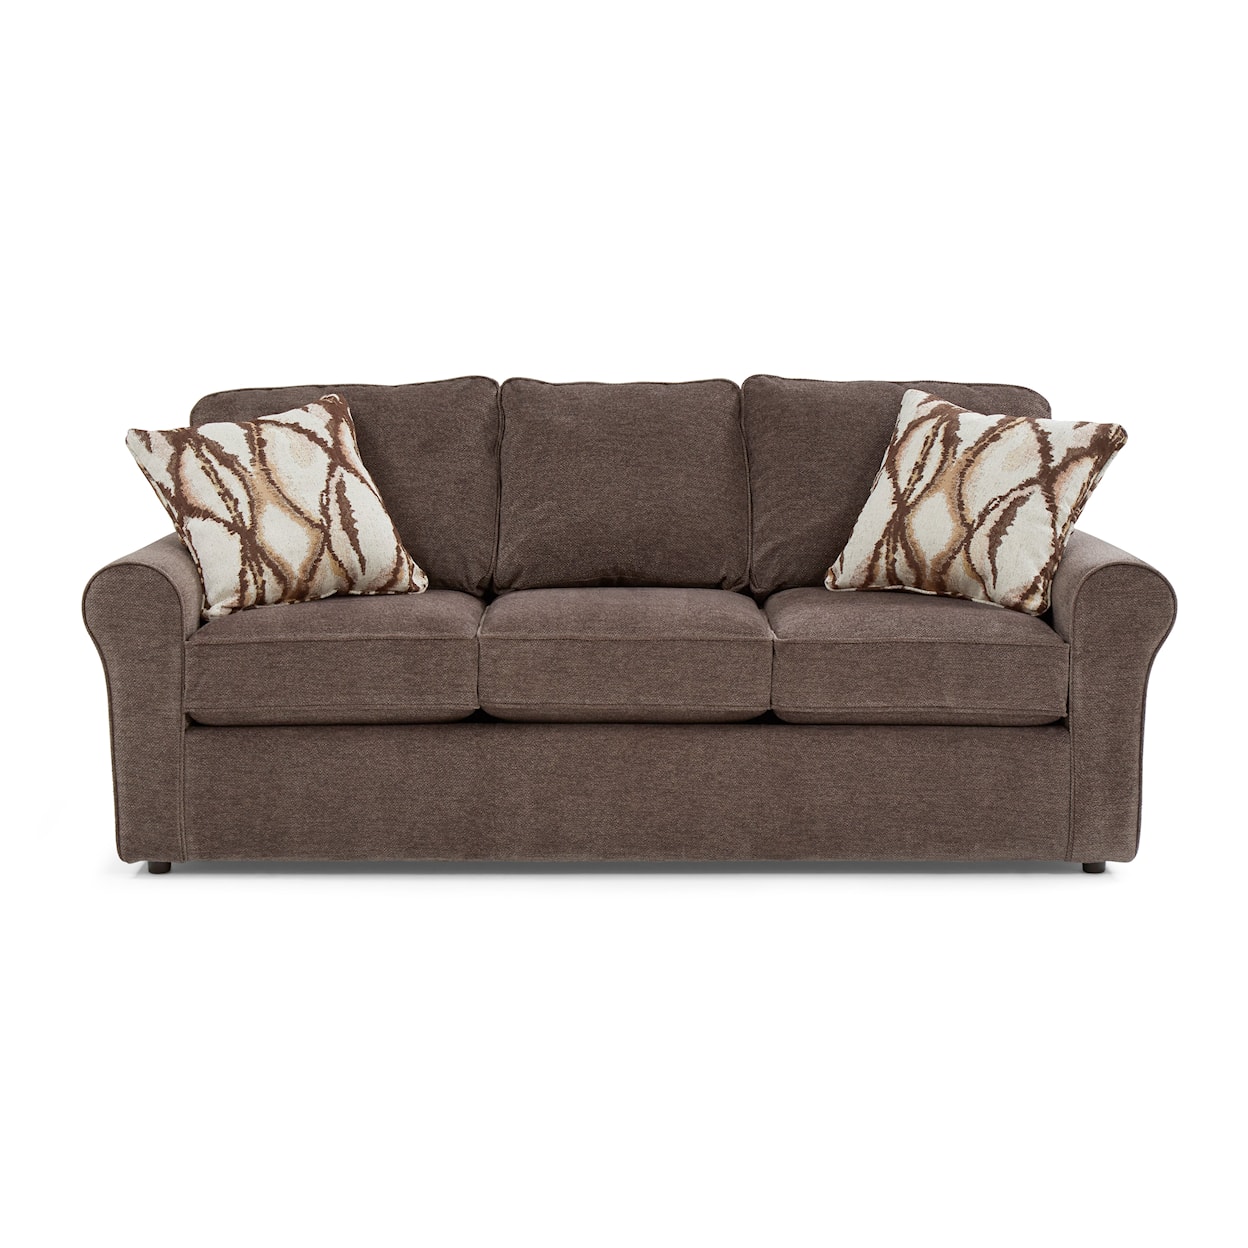 Best Home Furnishings Hanway Queen Sleeper Sofa w/ Memory Foam Mattress